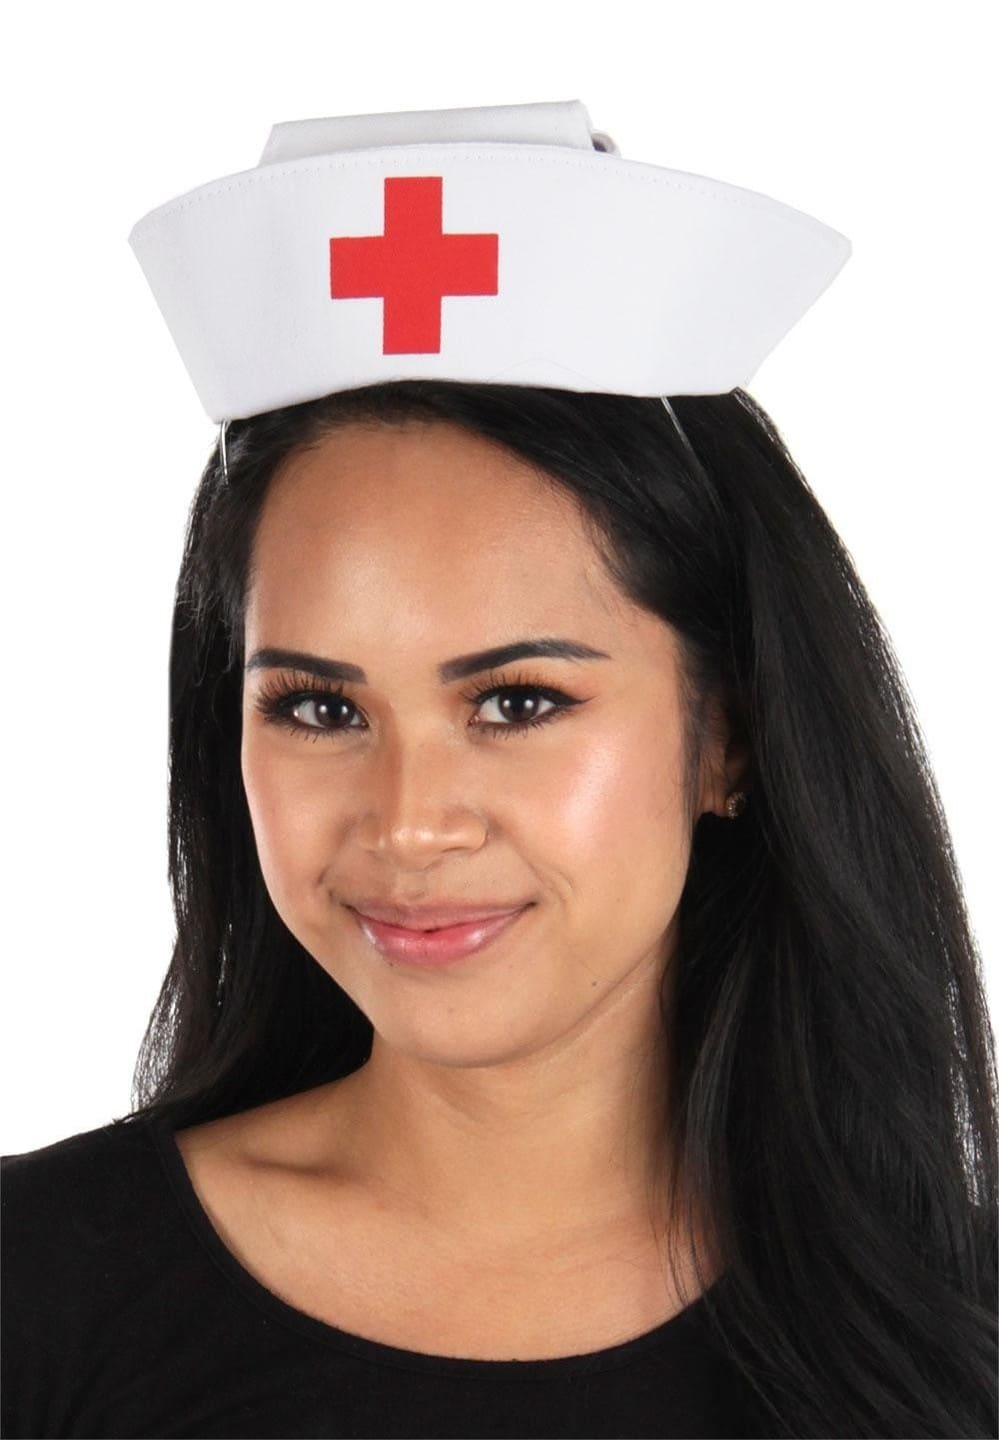 Nurse Hat 11